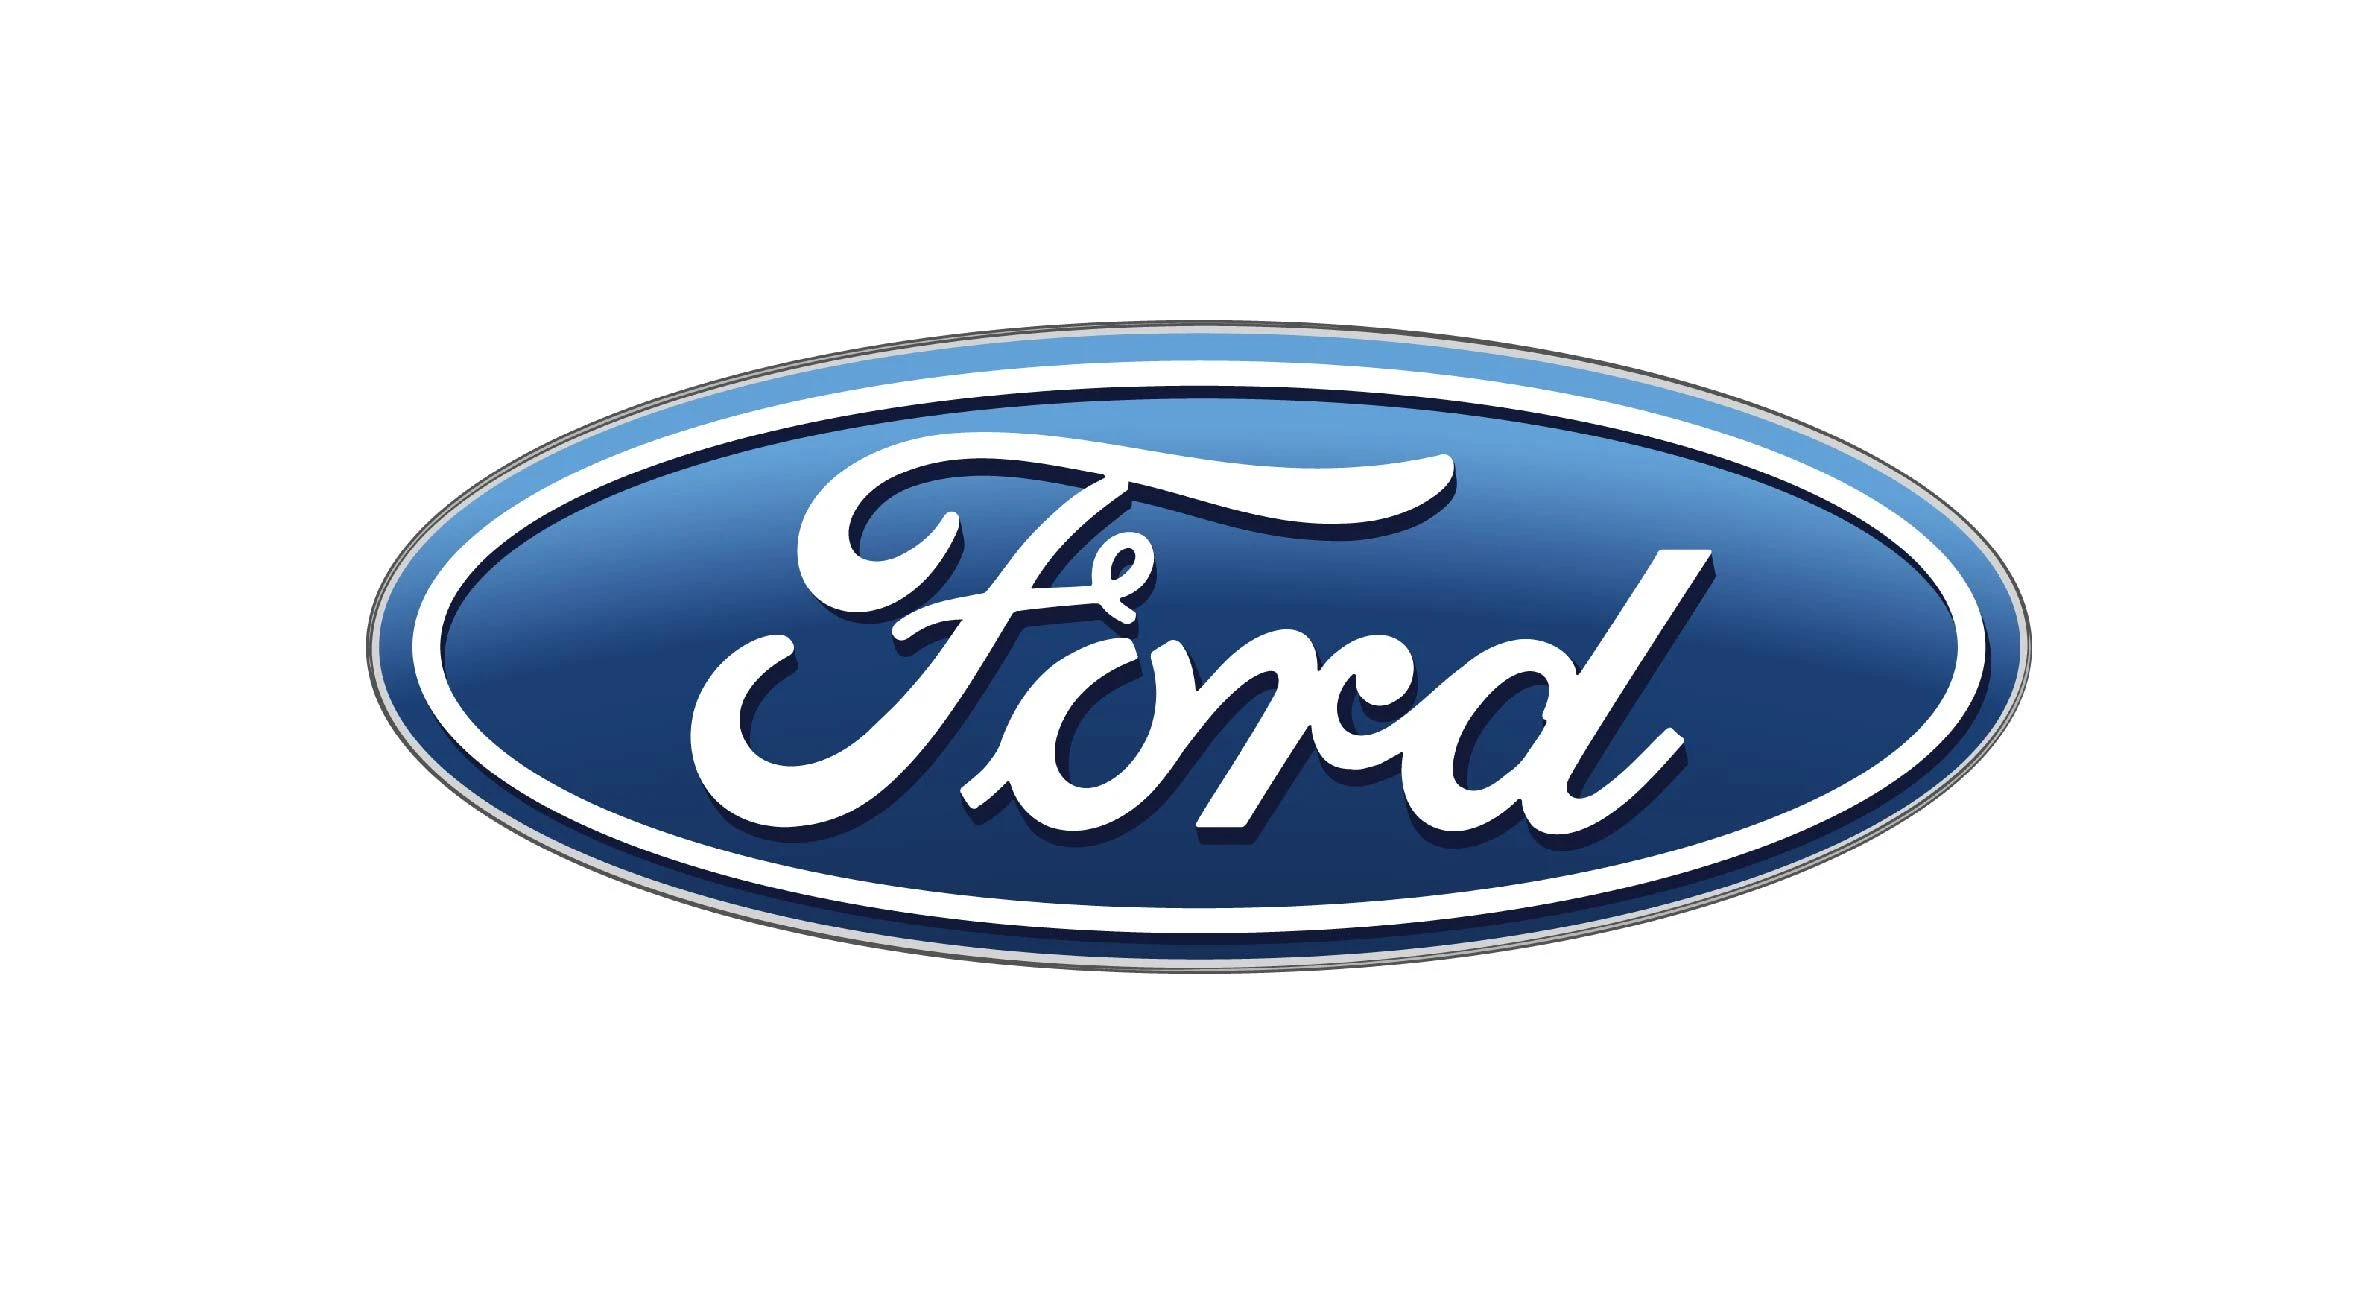 Ford car brand logo